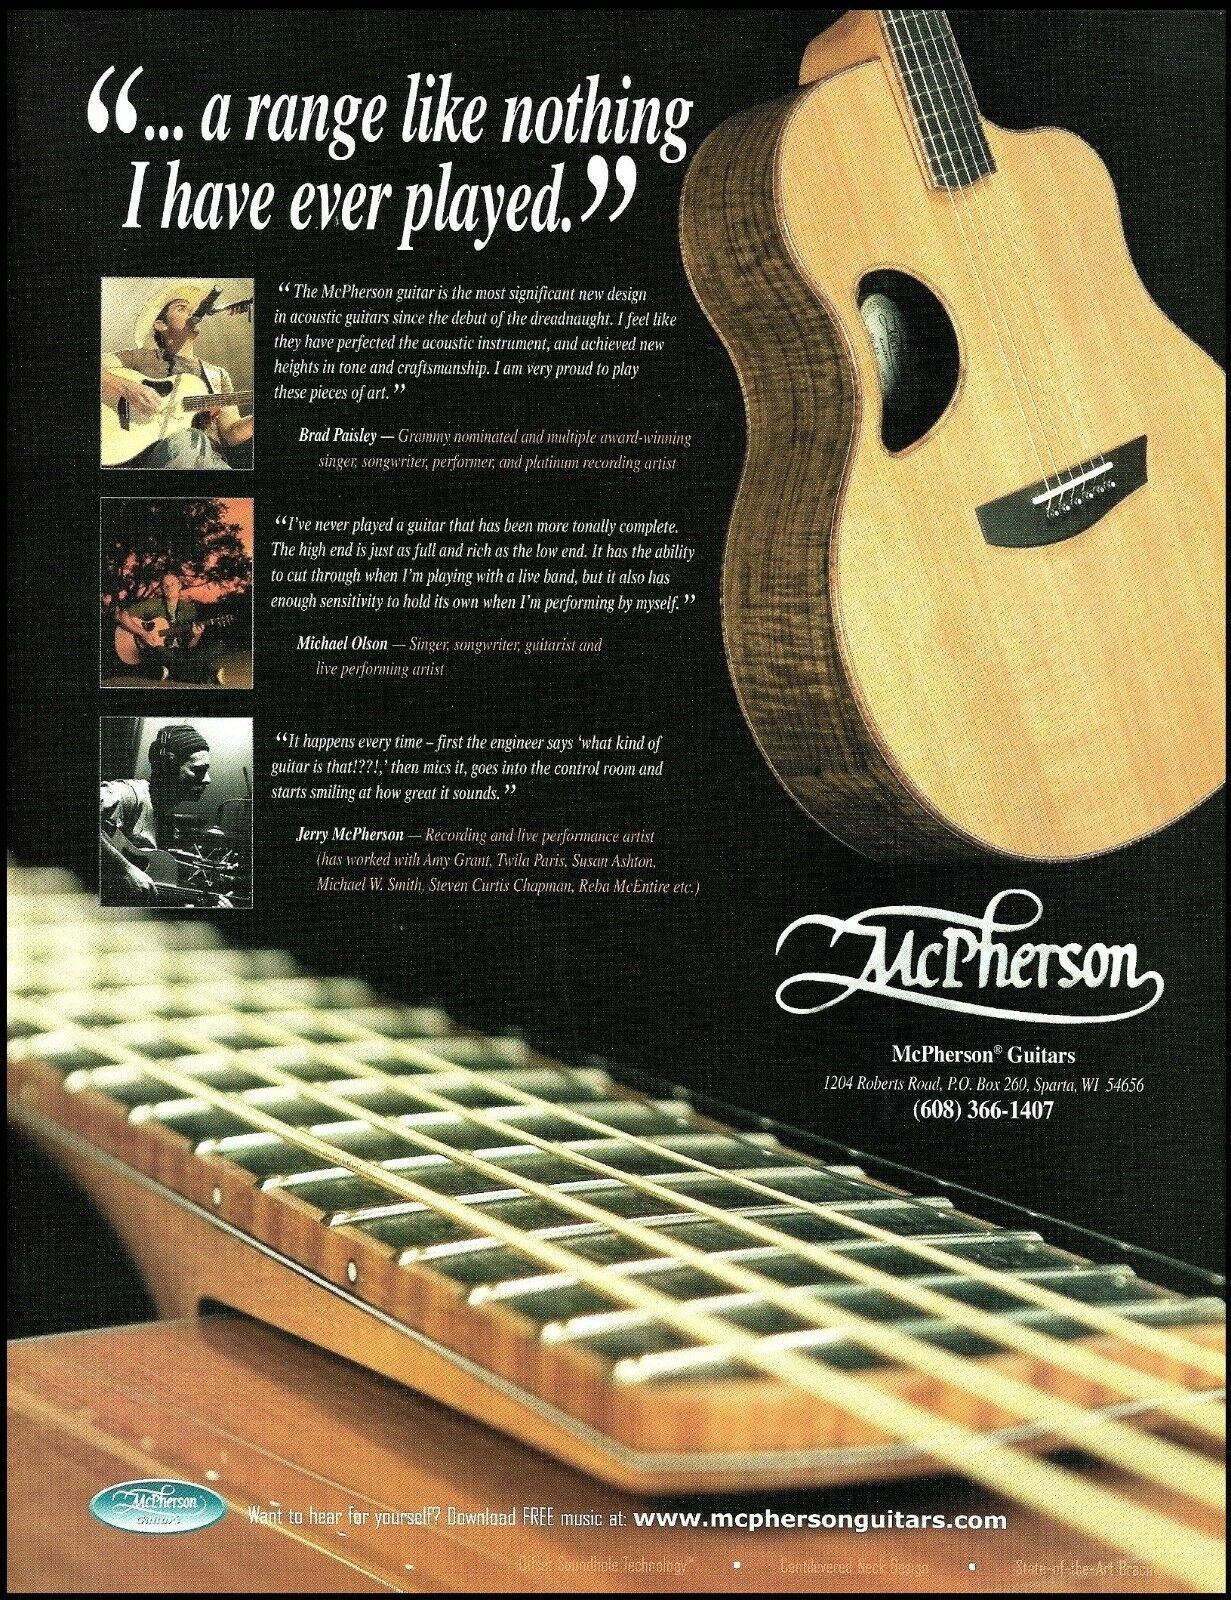 Jerry McPherson 2008 acoustic guitar advertisement Brad Paisley Michael Olsen ad